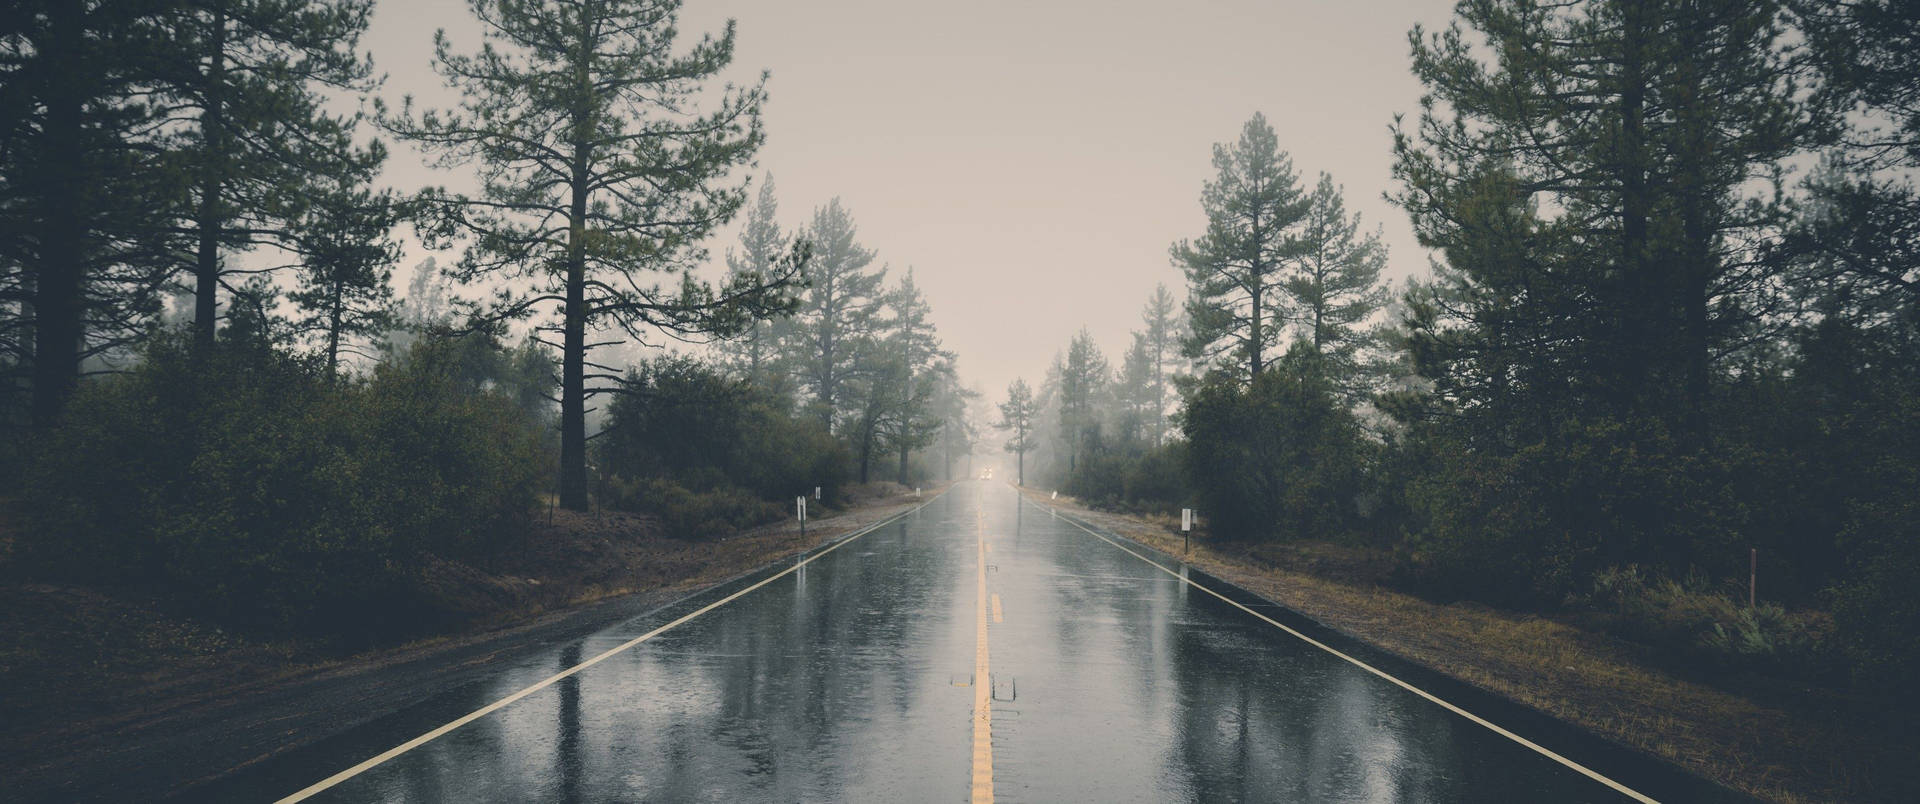 Rain On Highway Road Background